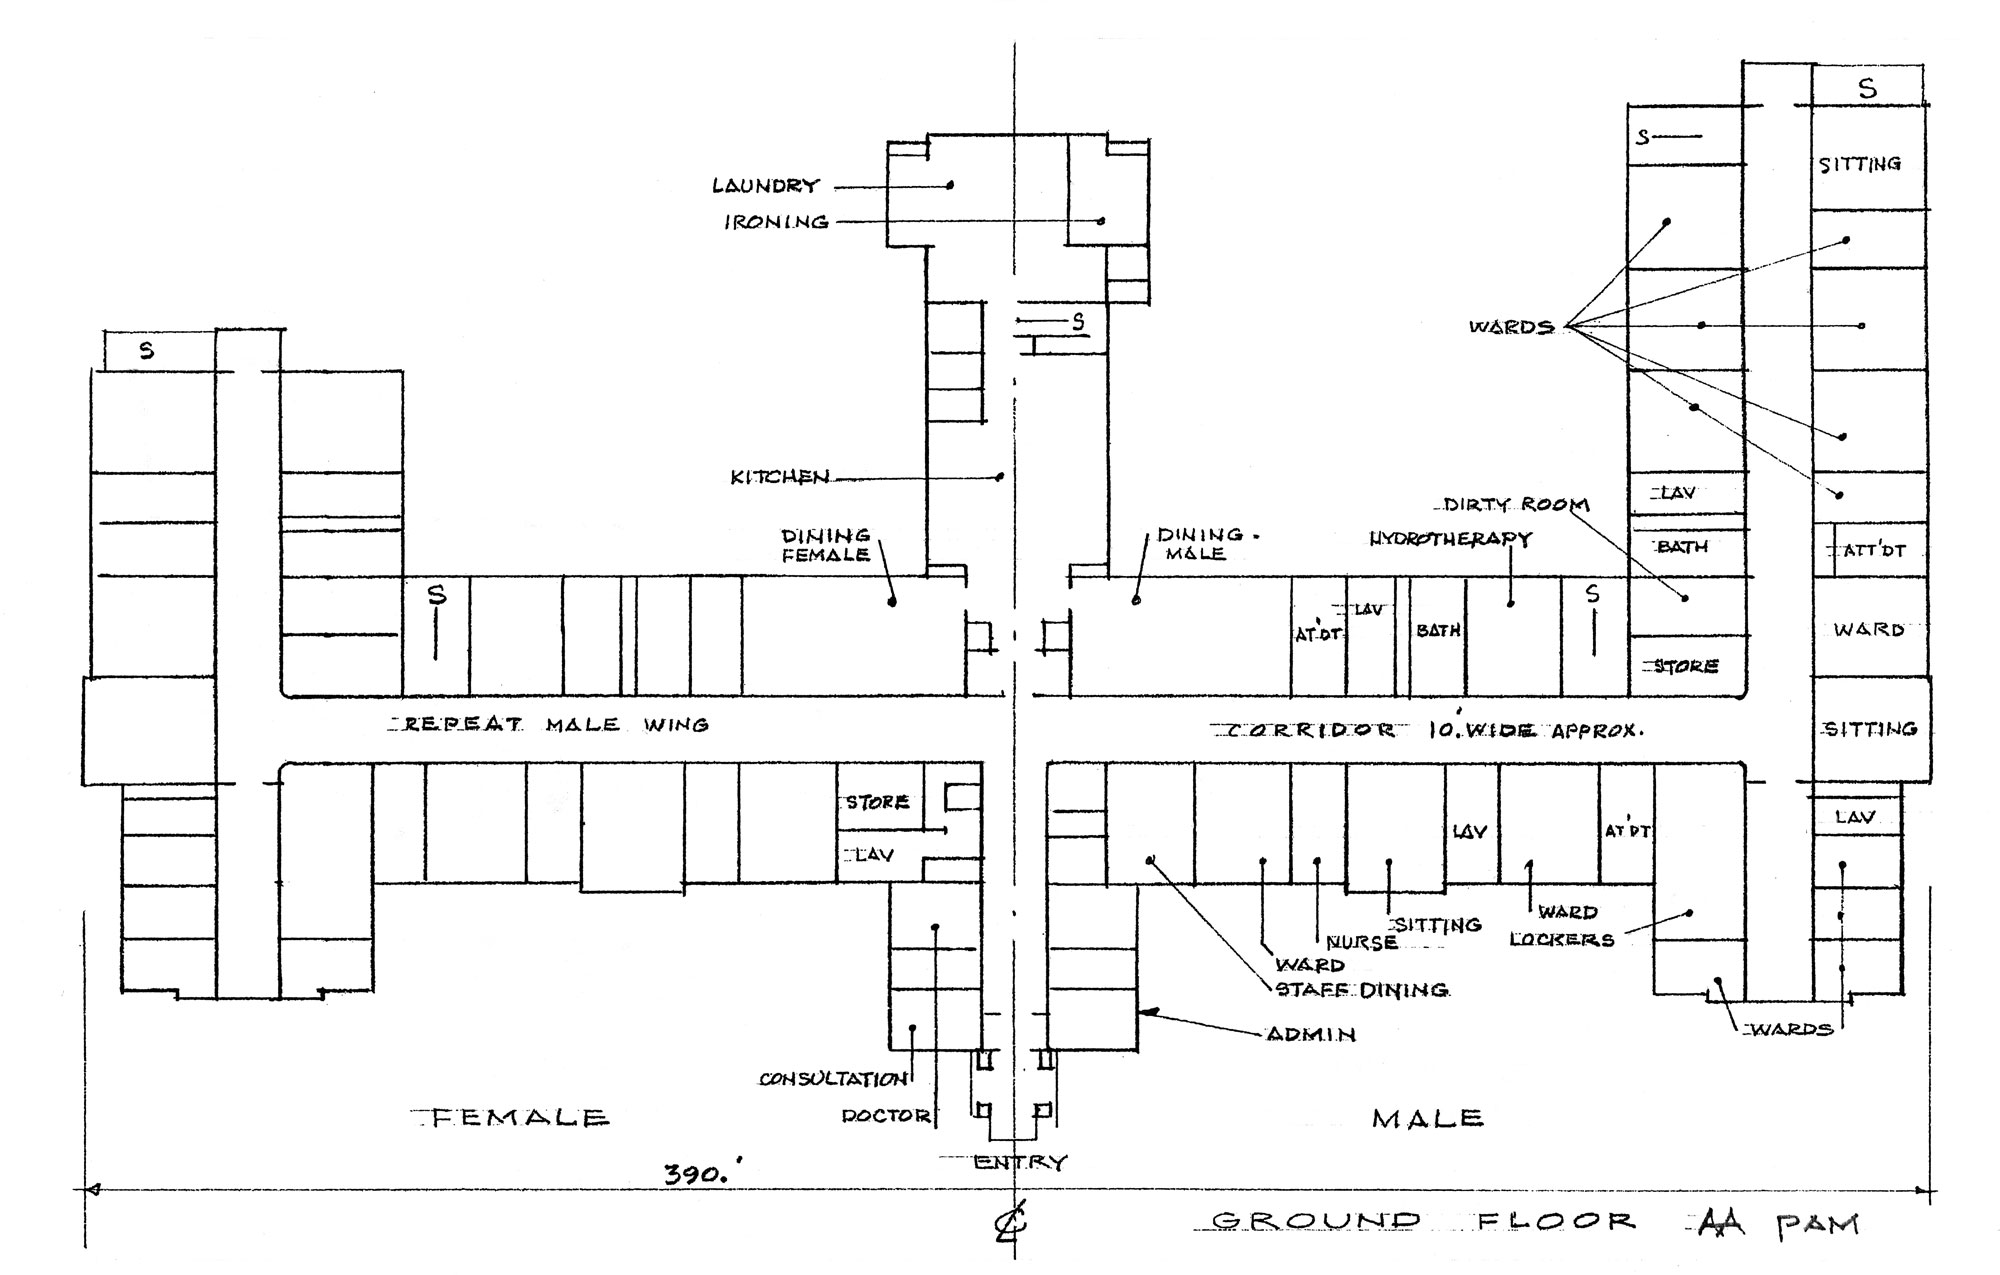 Floor plan of an asylum